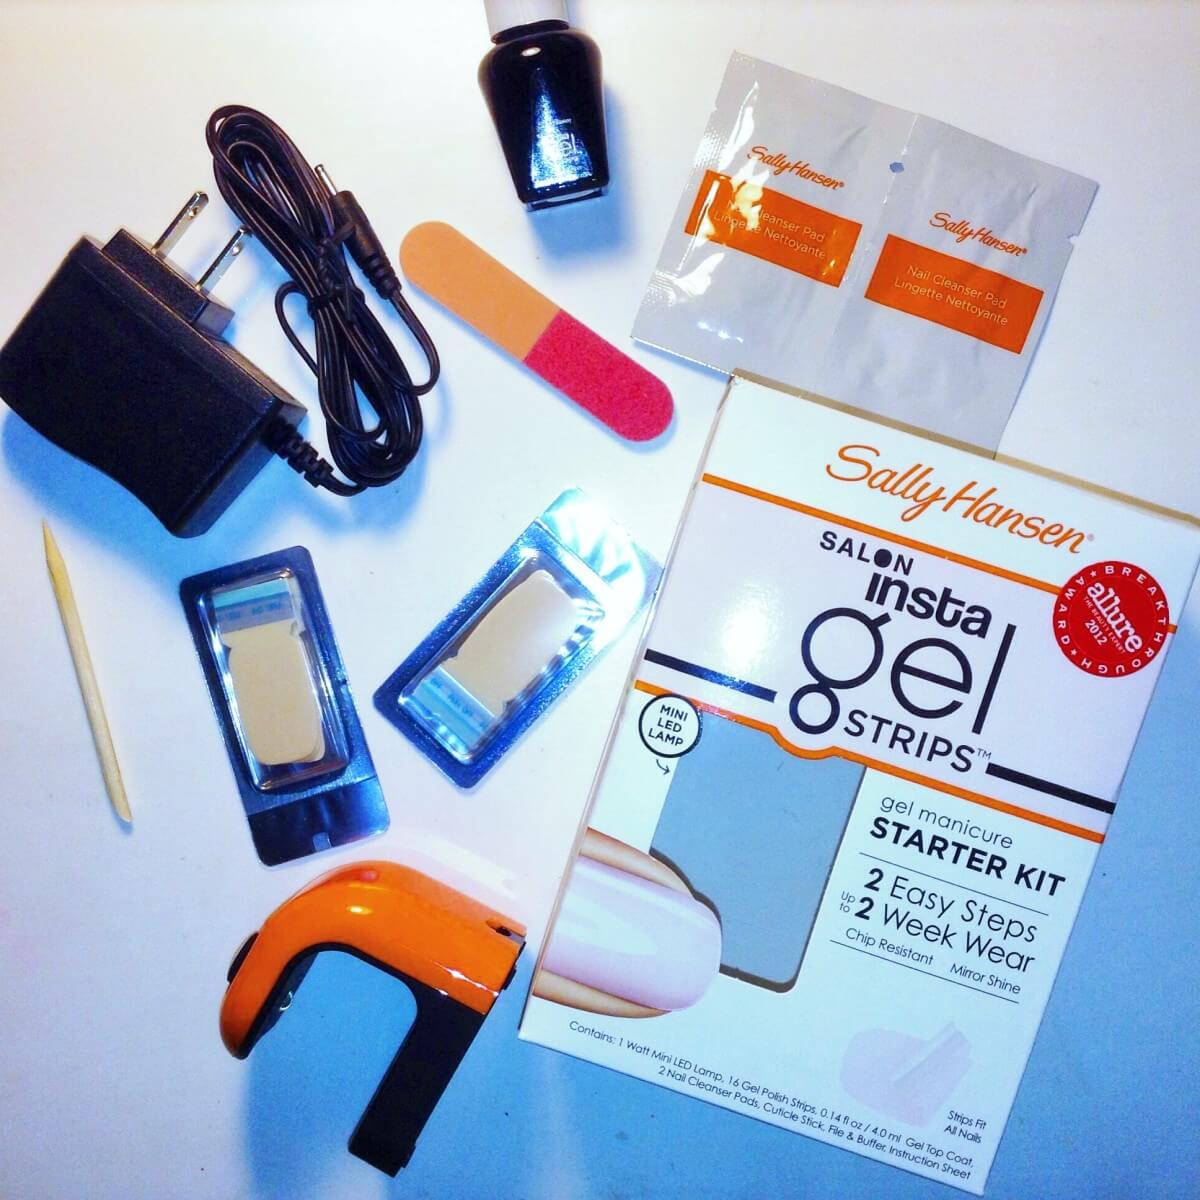 Gel nails tutorial with the Sally Hansen Salon Insta Gel Strips kit